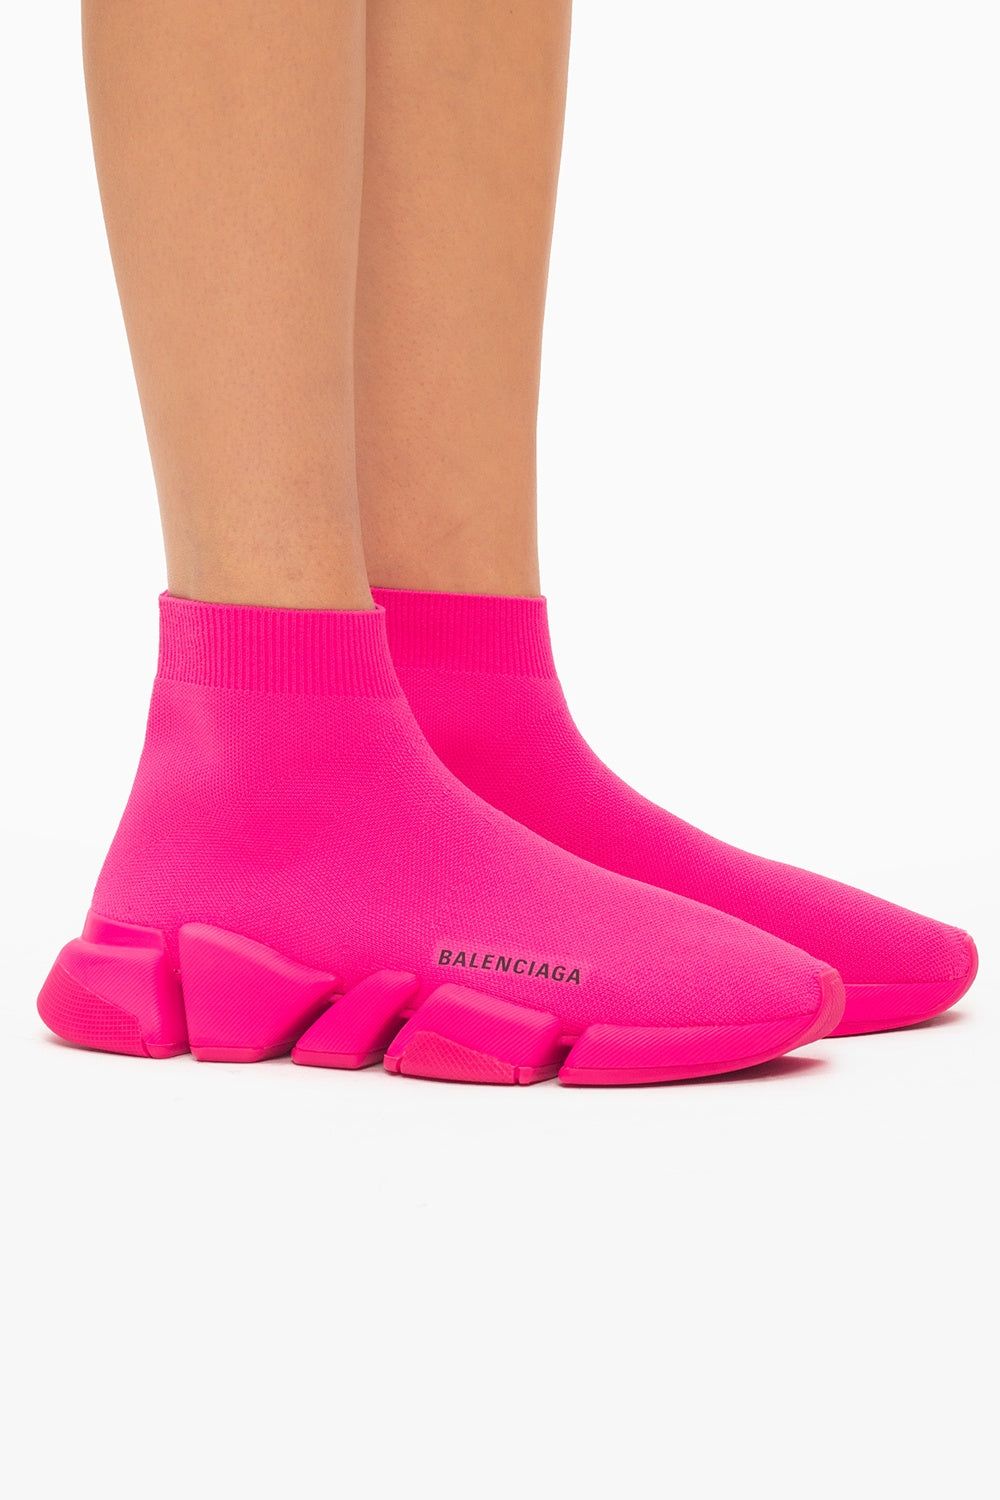 Balenciaga Speed, Speed 2.0, Sock shoes